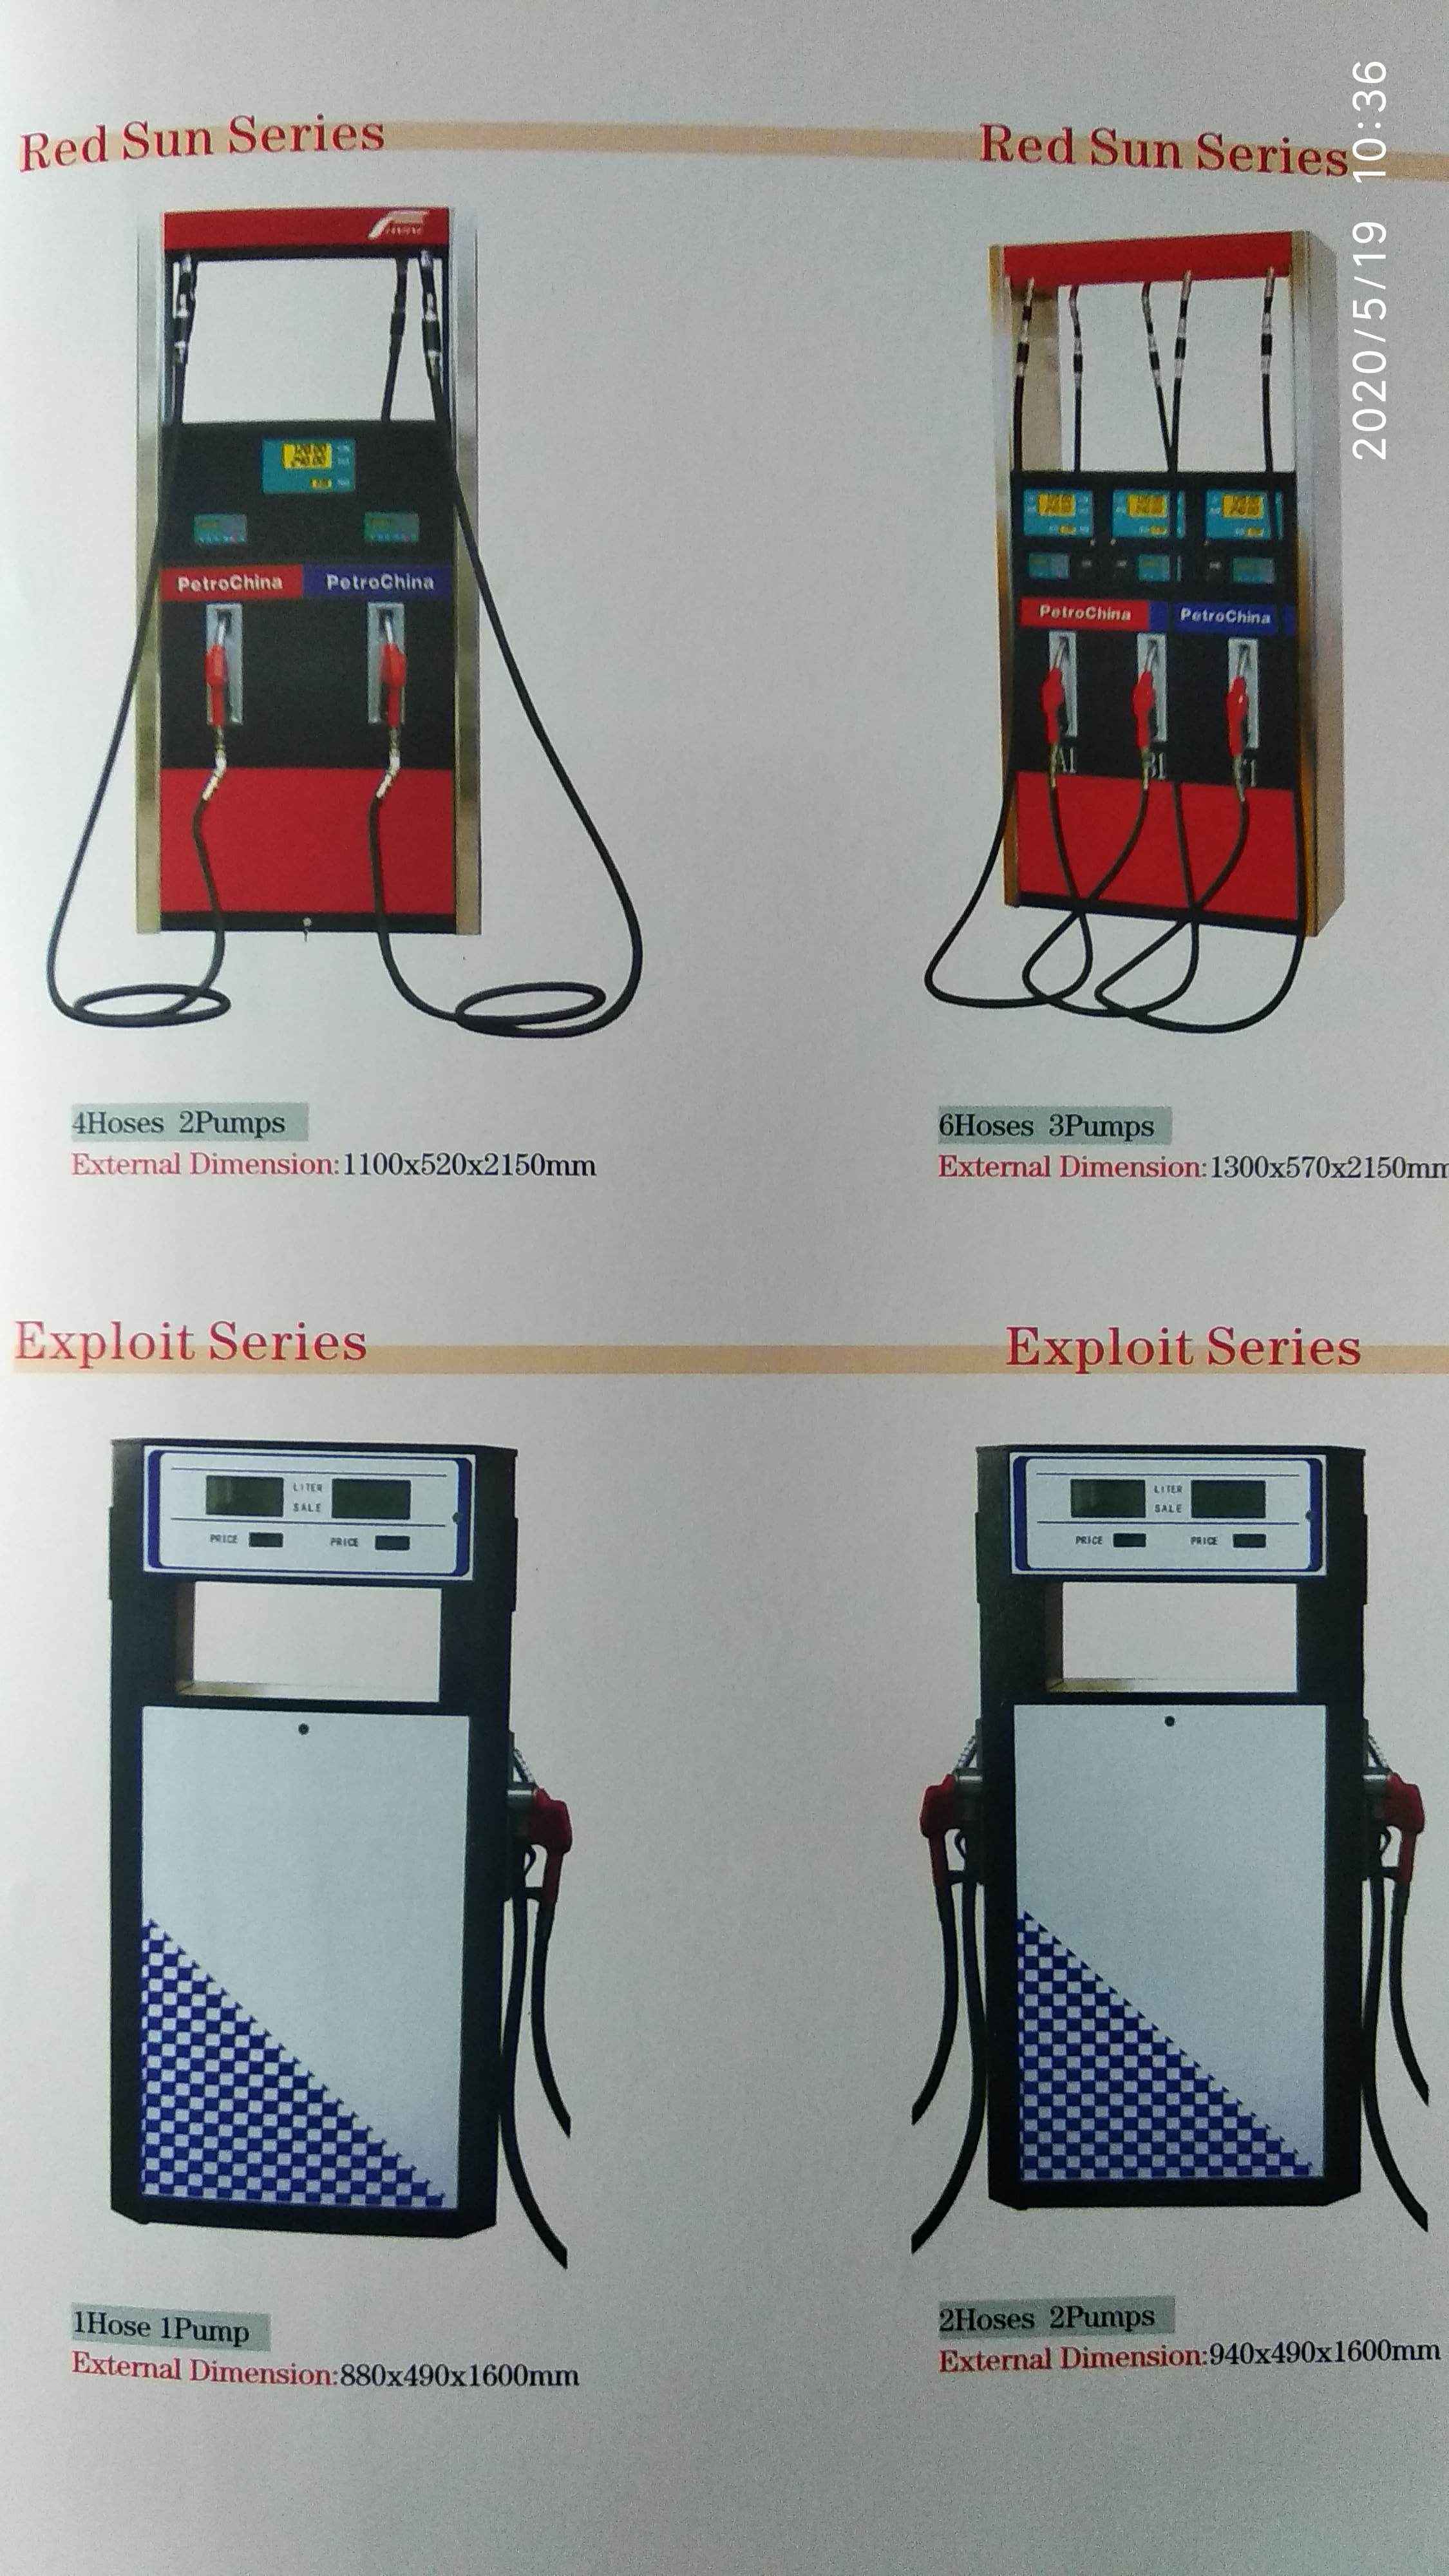 fuel dispensers